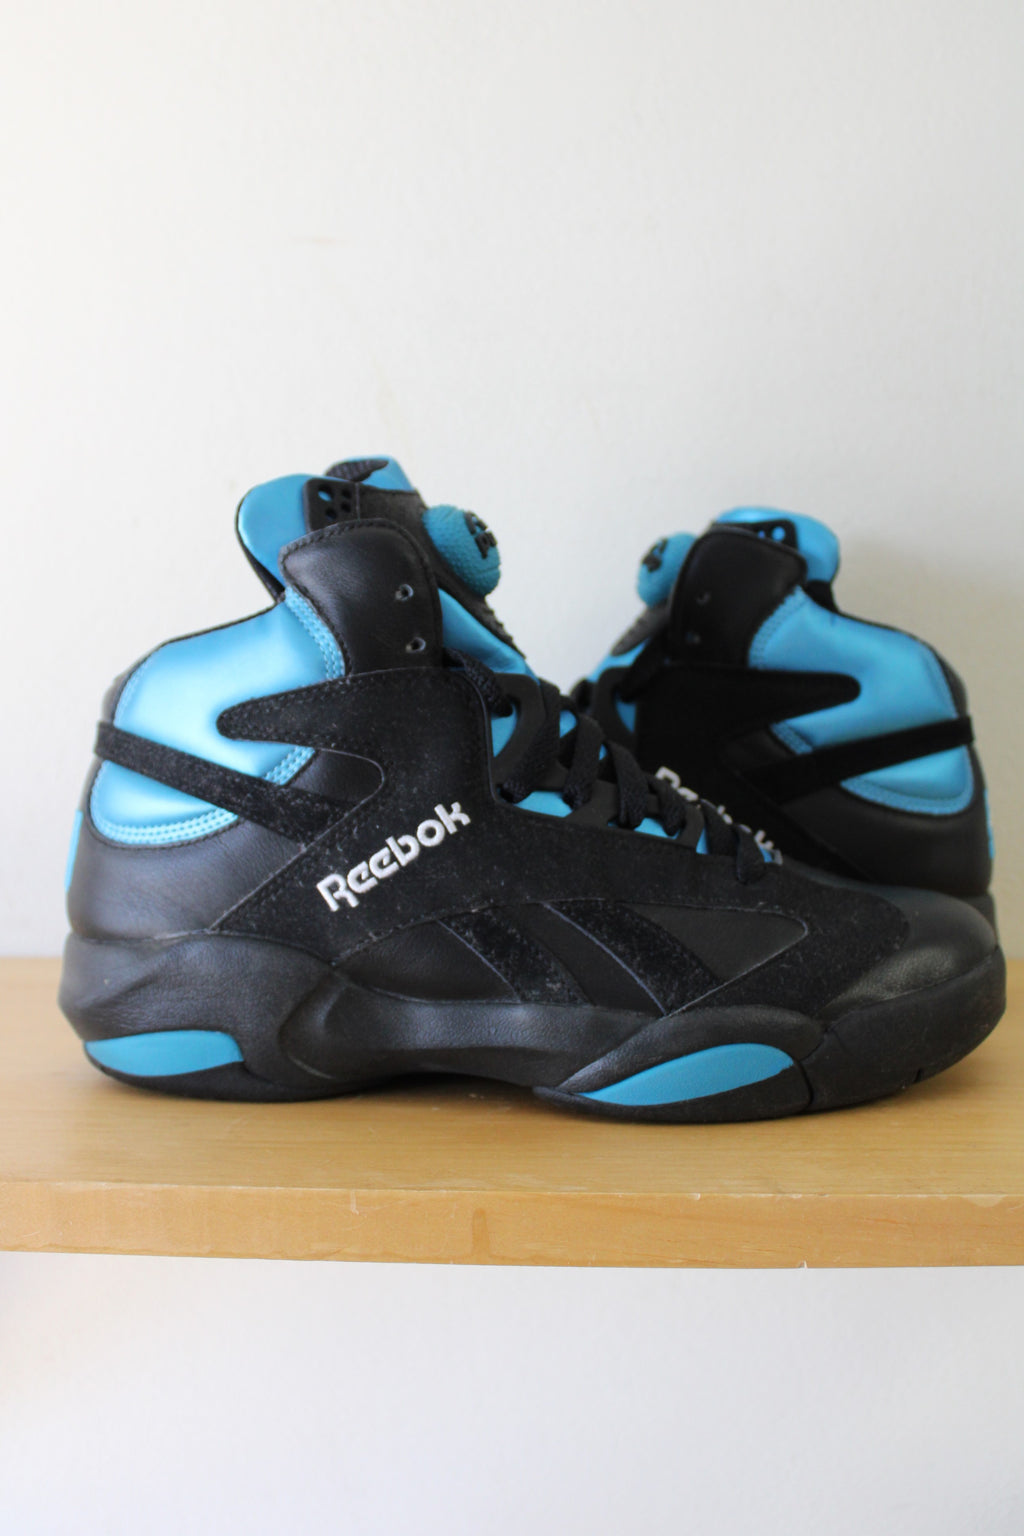 Reebok Pump Shaq Attack 1 Black Azure Blue Orlando Magic Sneakers | Men's 9